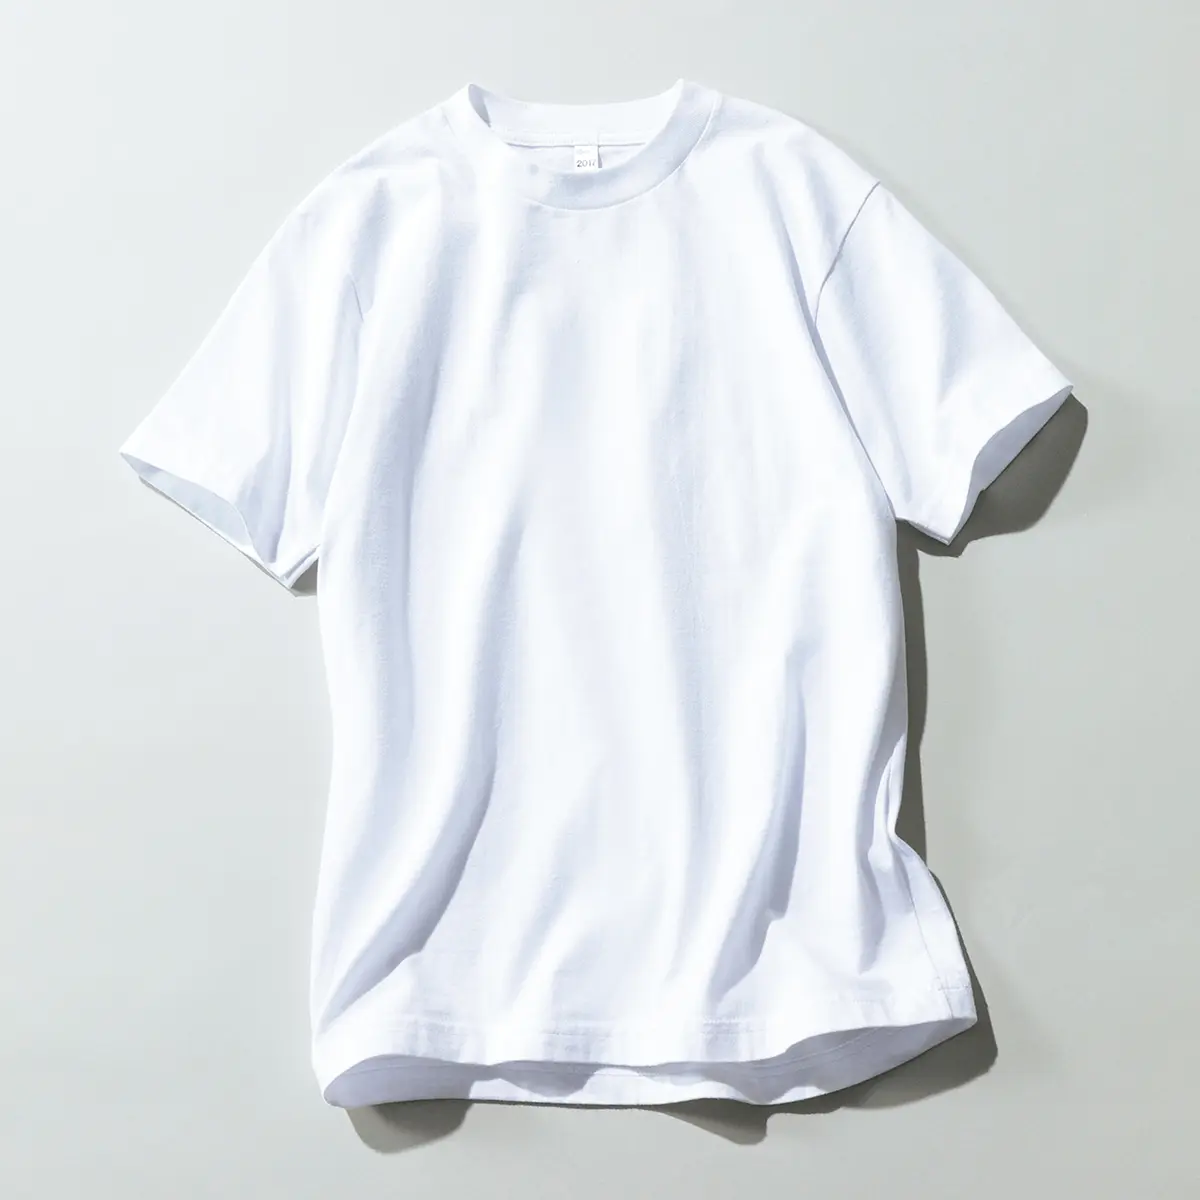 『LOS ANGELES APPAREL（ロサンゼルス アパレル）』の白Tシャツ、6.0OZ CREW NECK HEAVY COMBED COTTON T-SHIRT